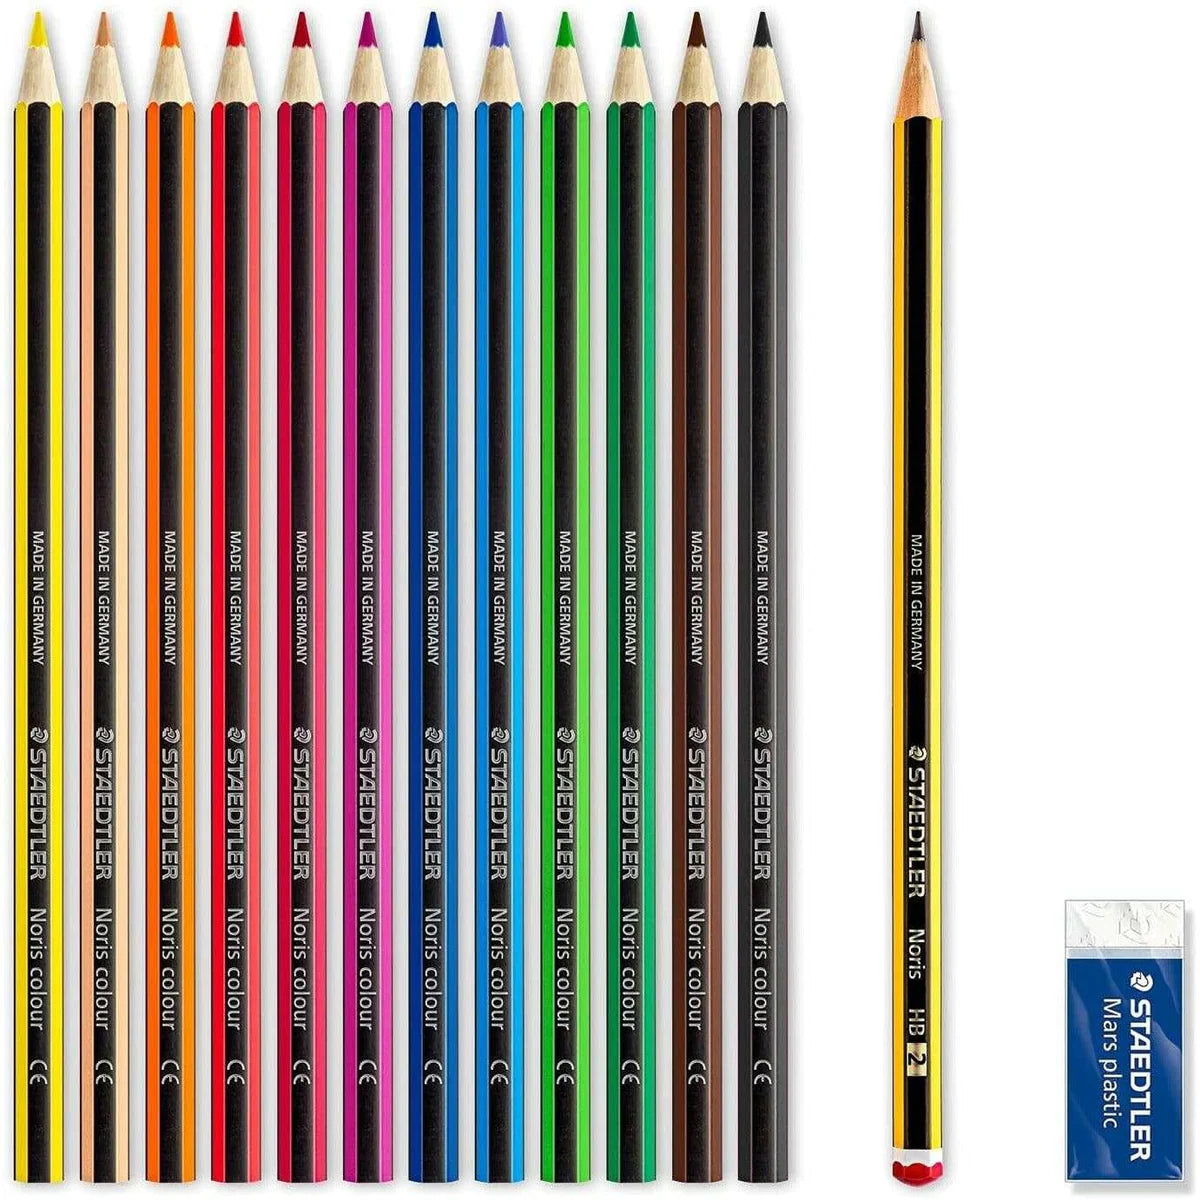 STAEDTLER Noris Club 12 Colouring Pencils Set